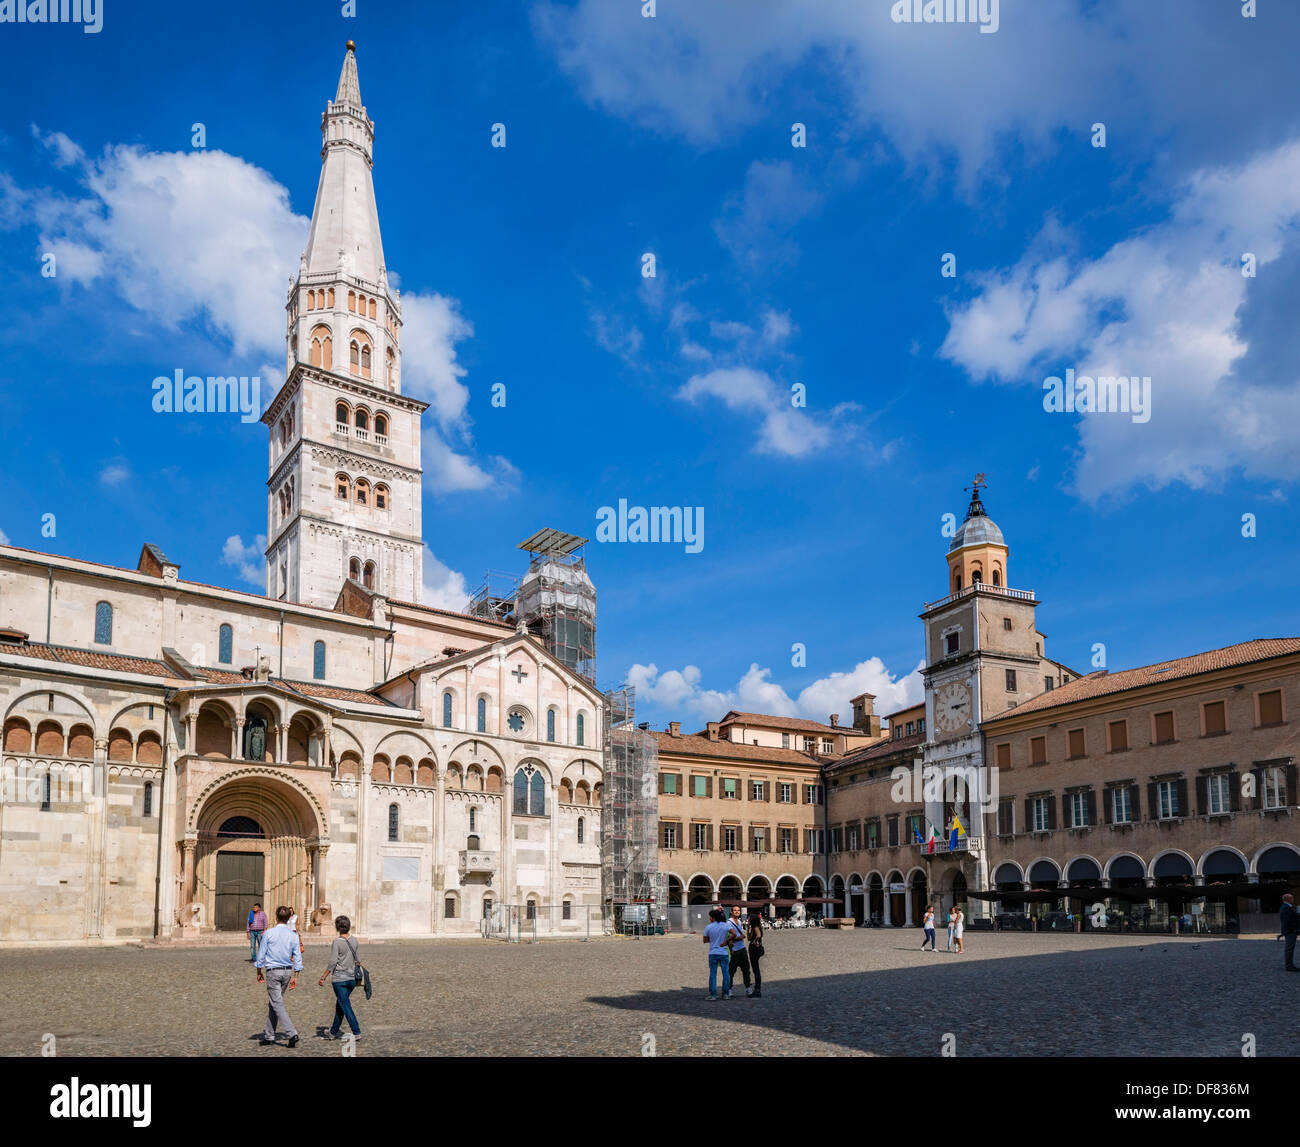 The Duomo, Torre Ghirlandina and Palazzo Comunale, Piazza Grande, Modena, Emilia Romagna, Italy Stock Photo